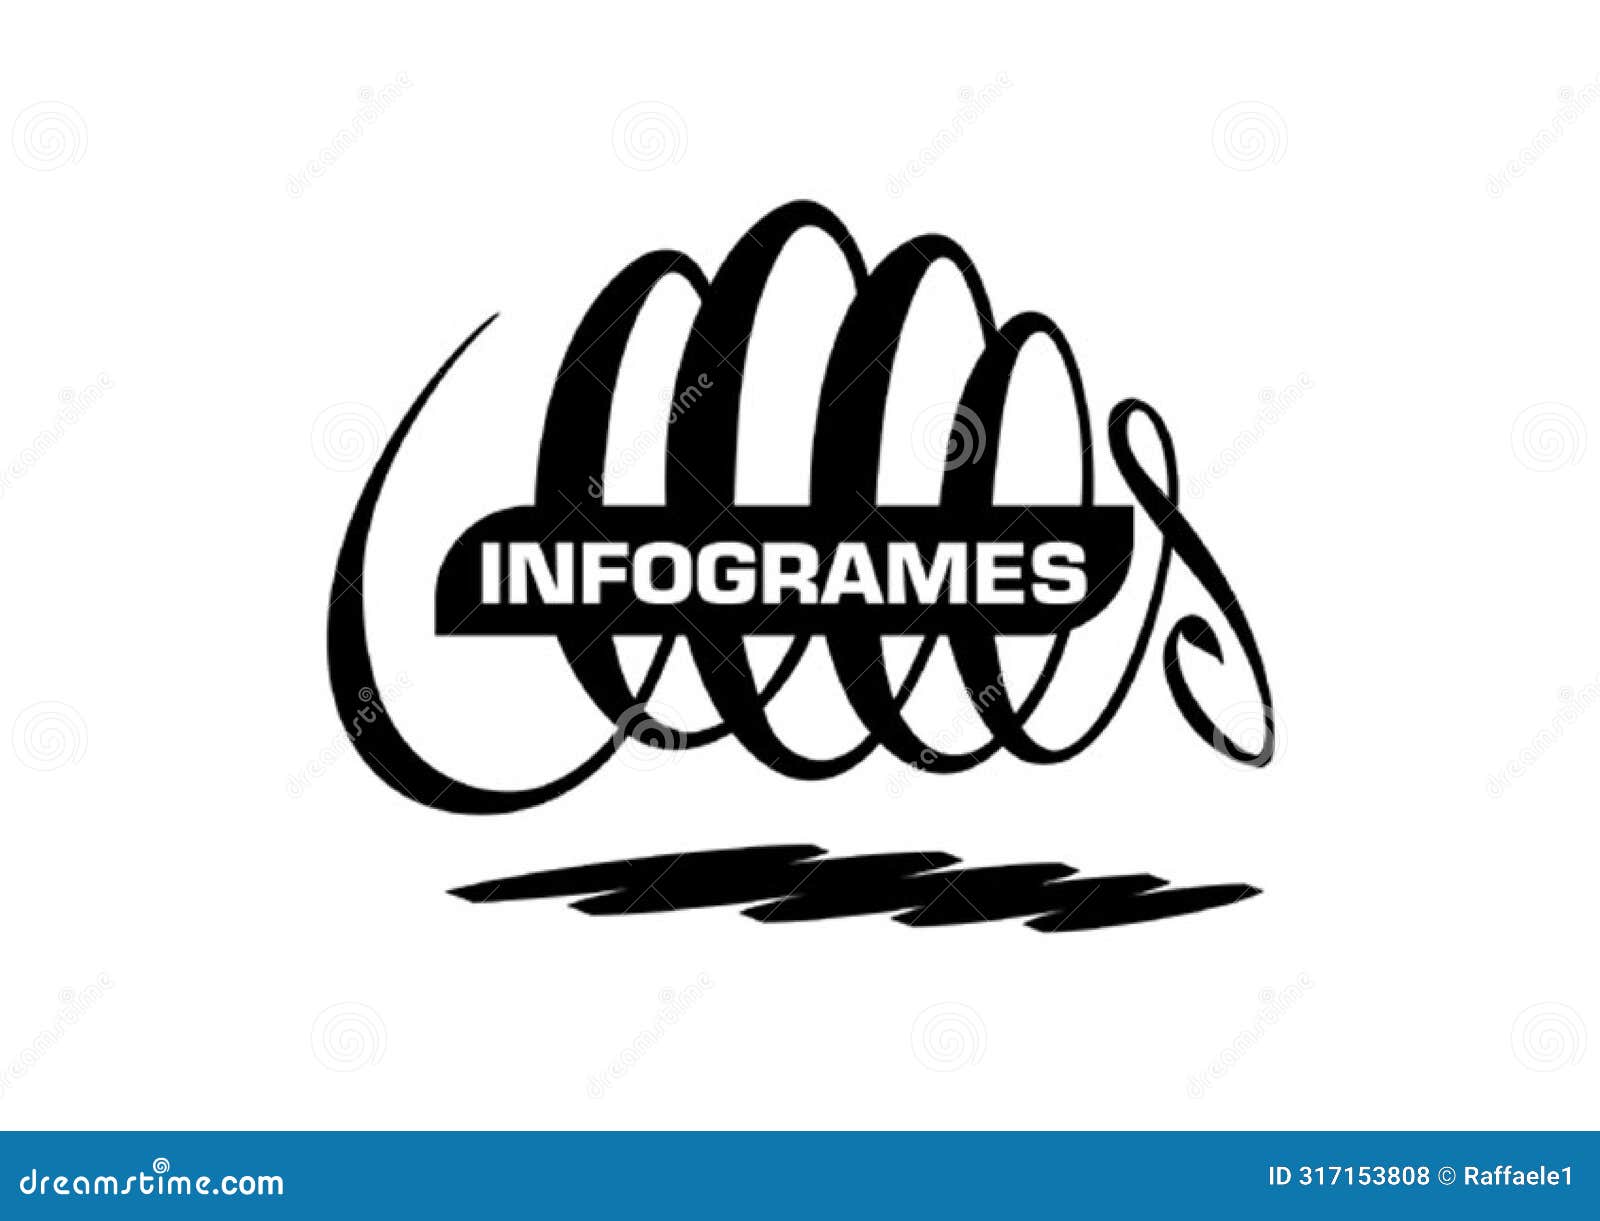 infogrames logo